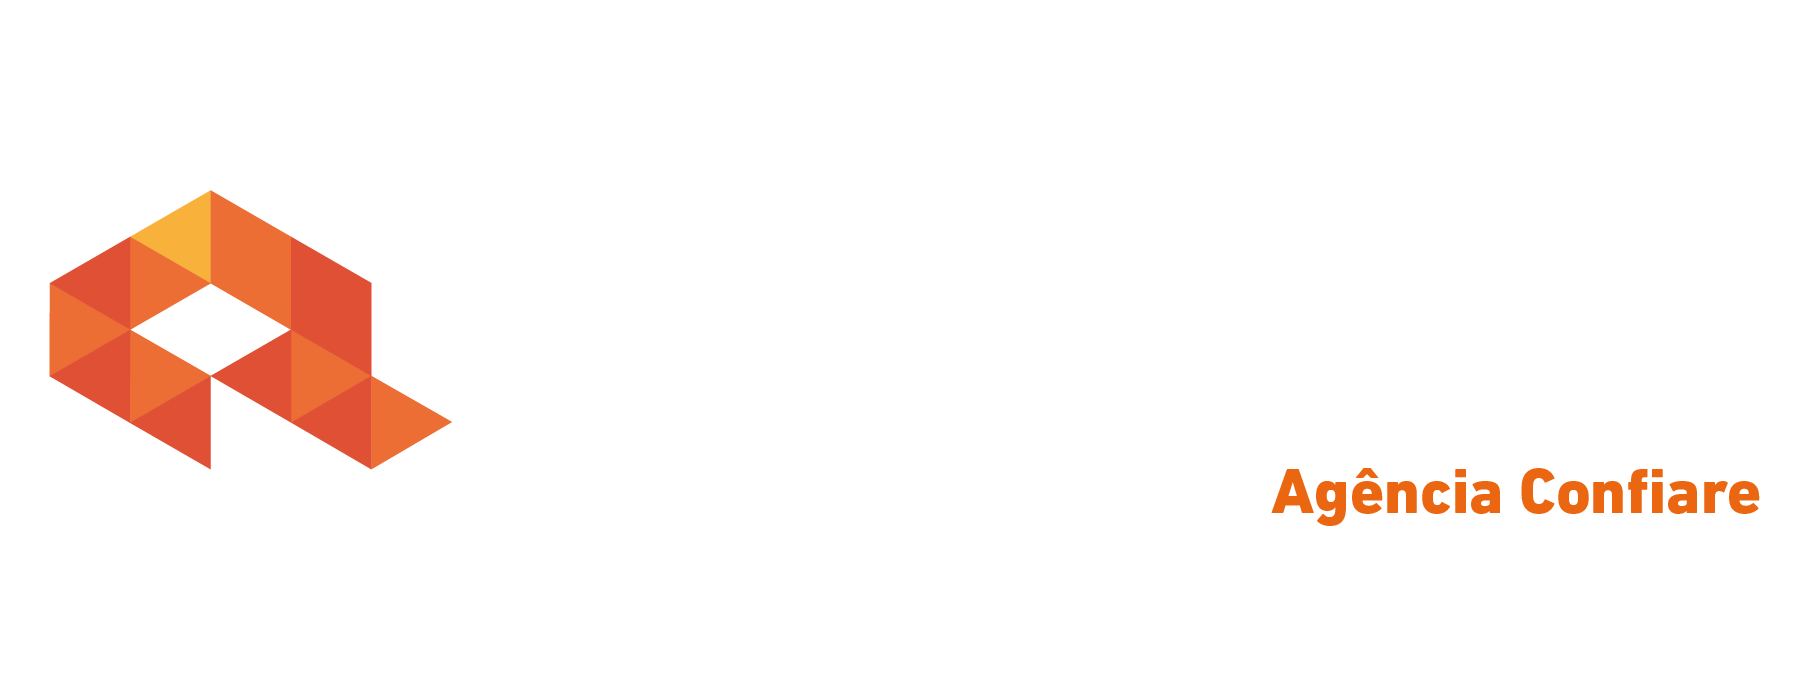 Logo crédito real Crédito Real Confiare